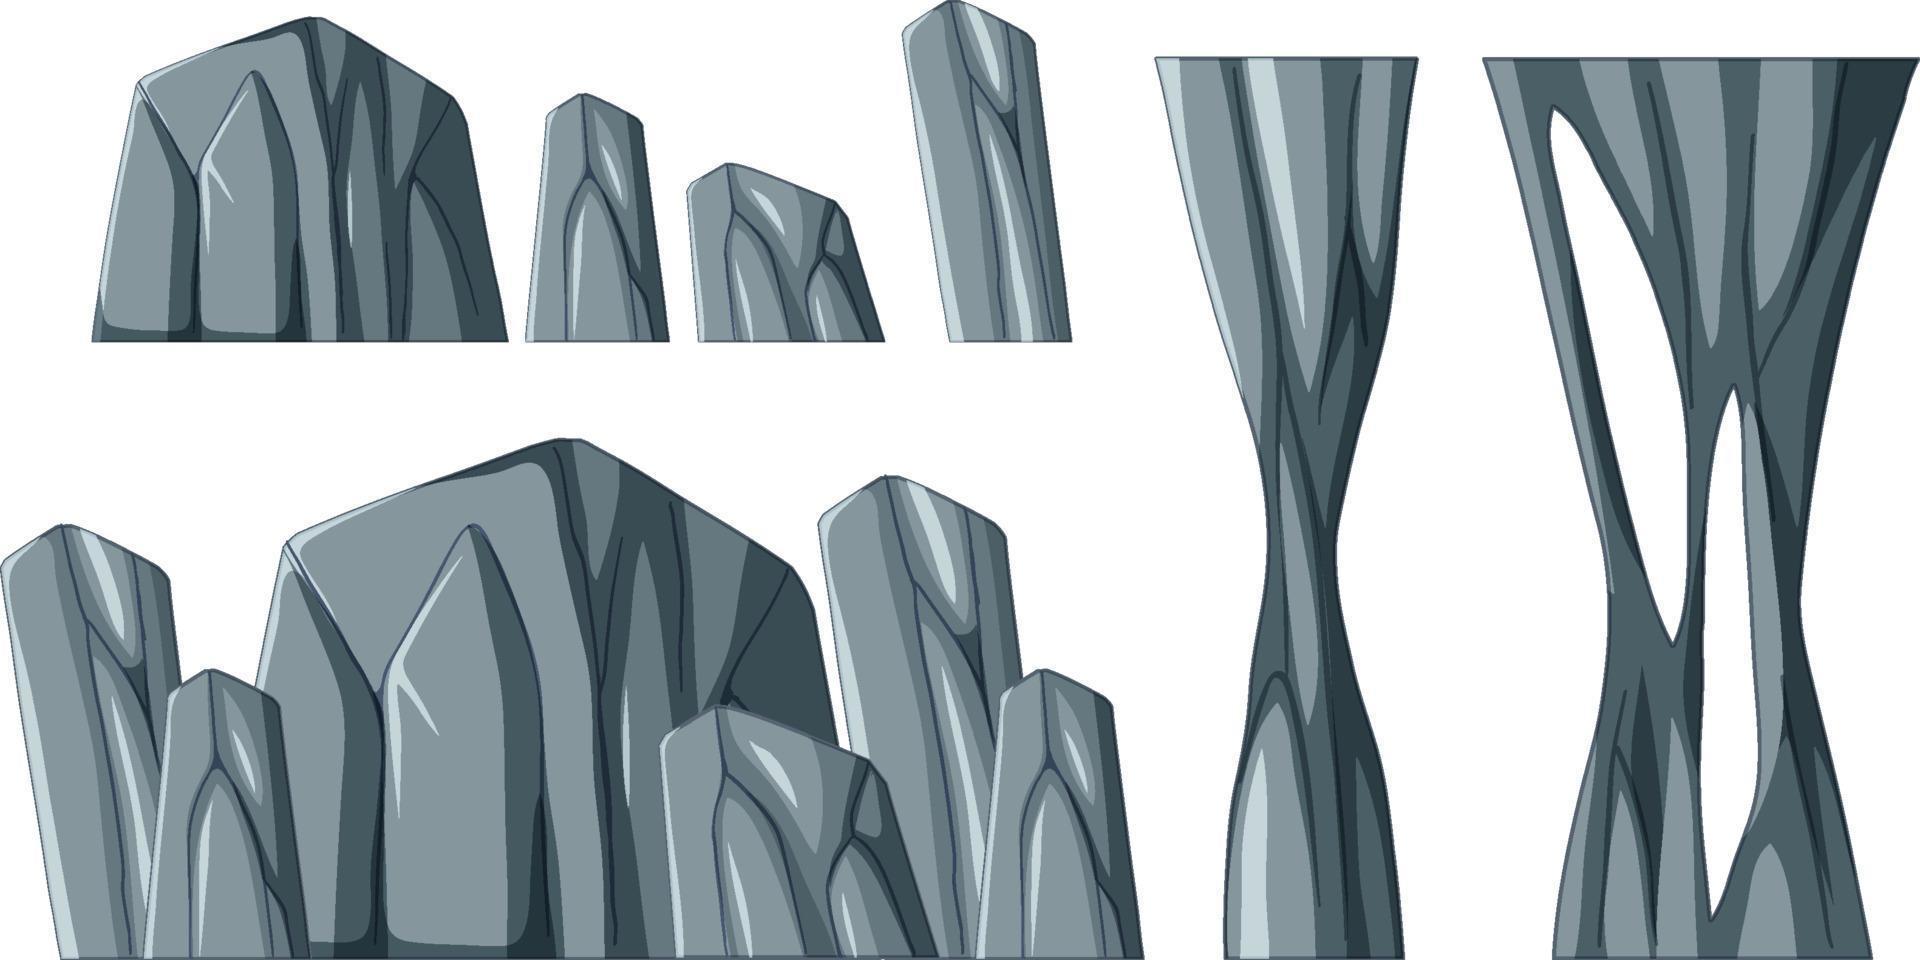 Stalactite stalagmite in cartoon style vector